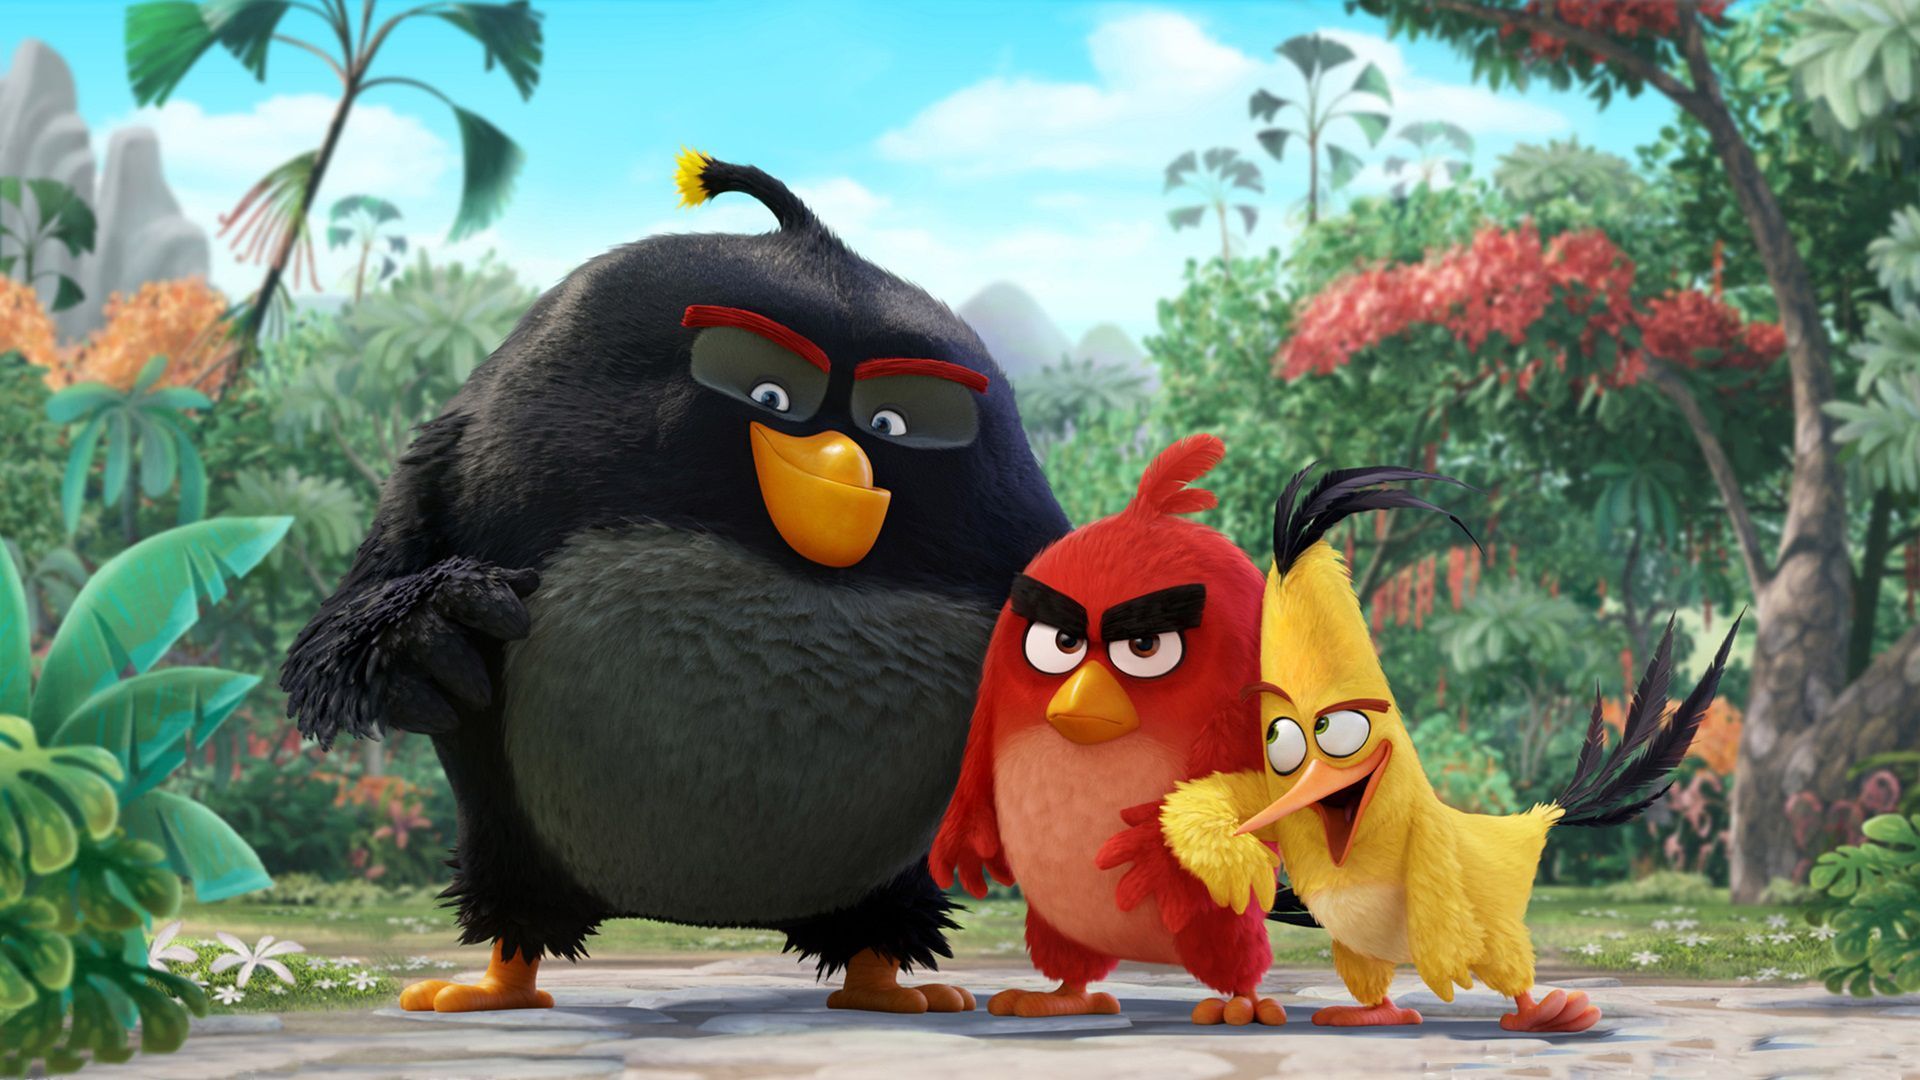 Where to Stream The Angry Birds Movie?